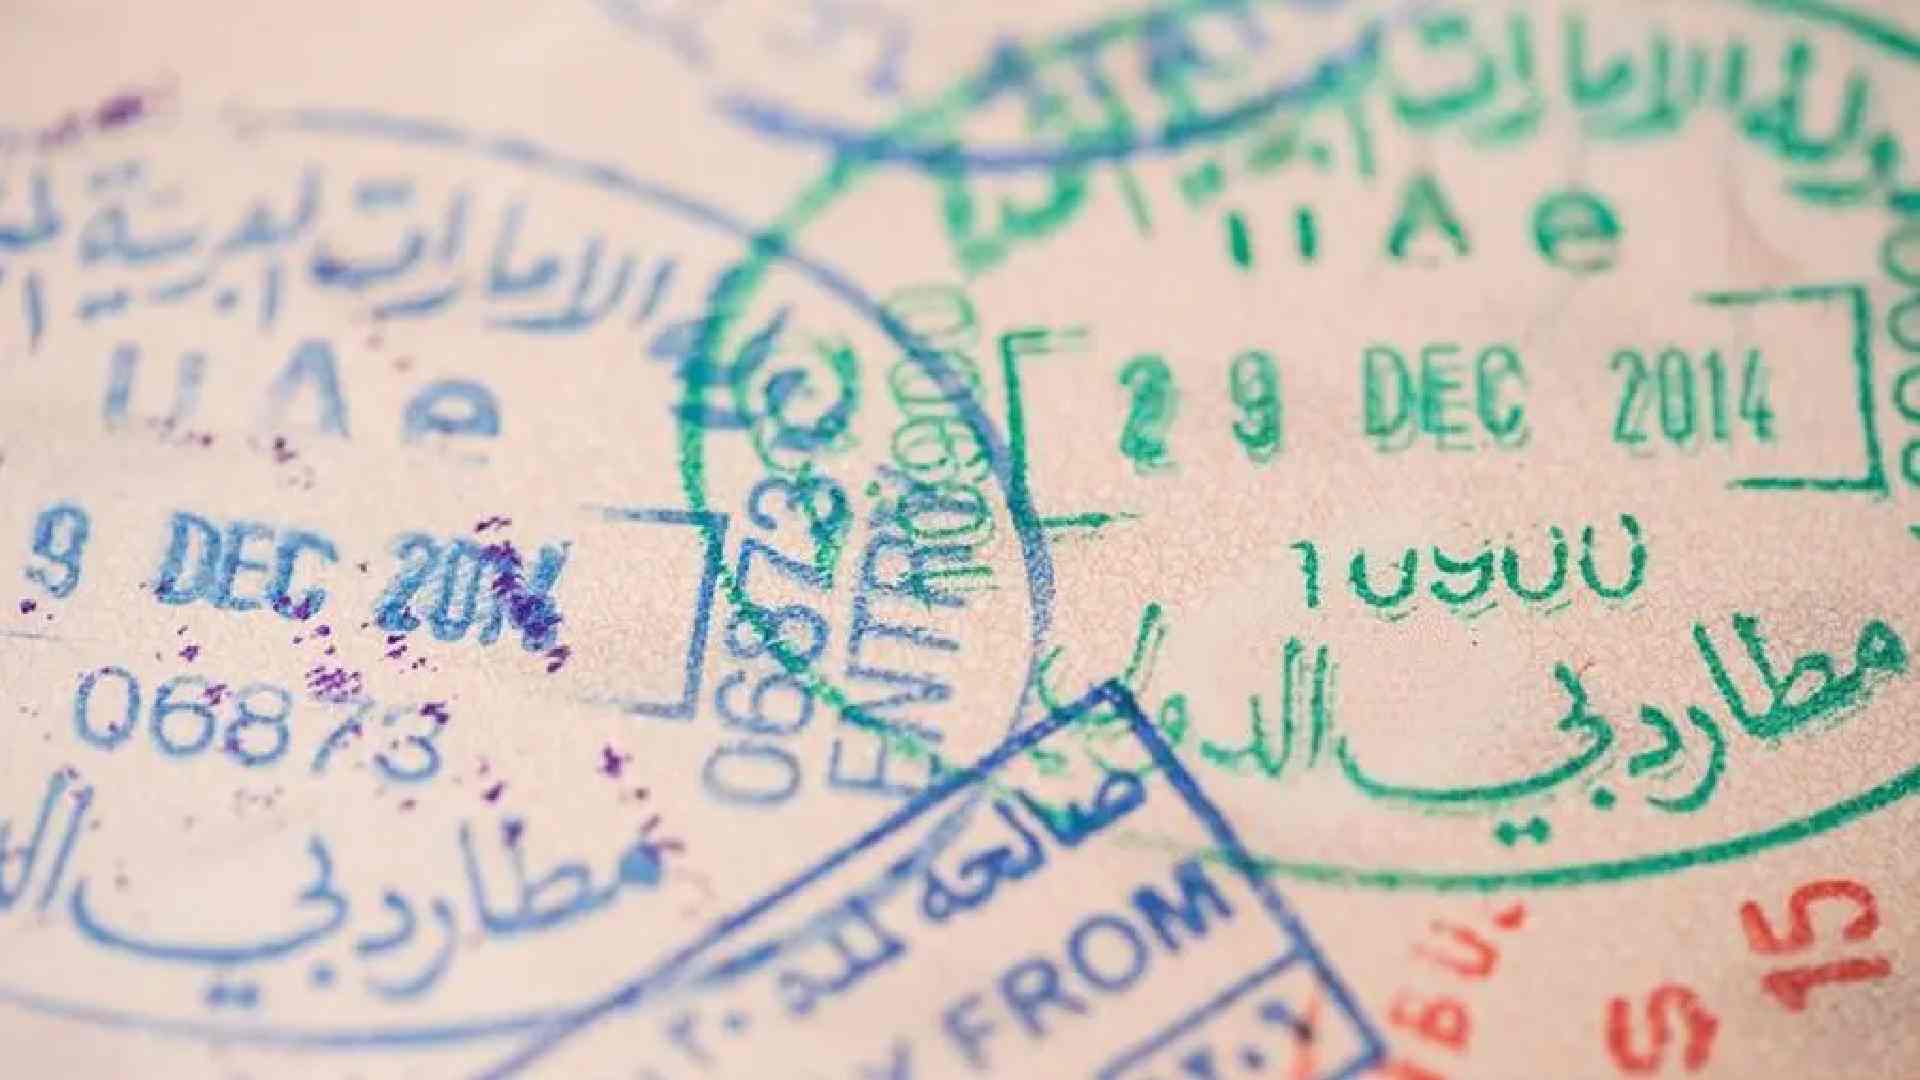 visa cancellation letter